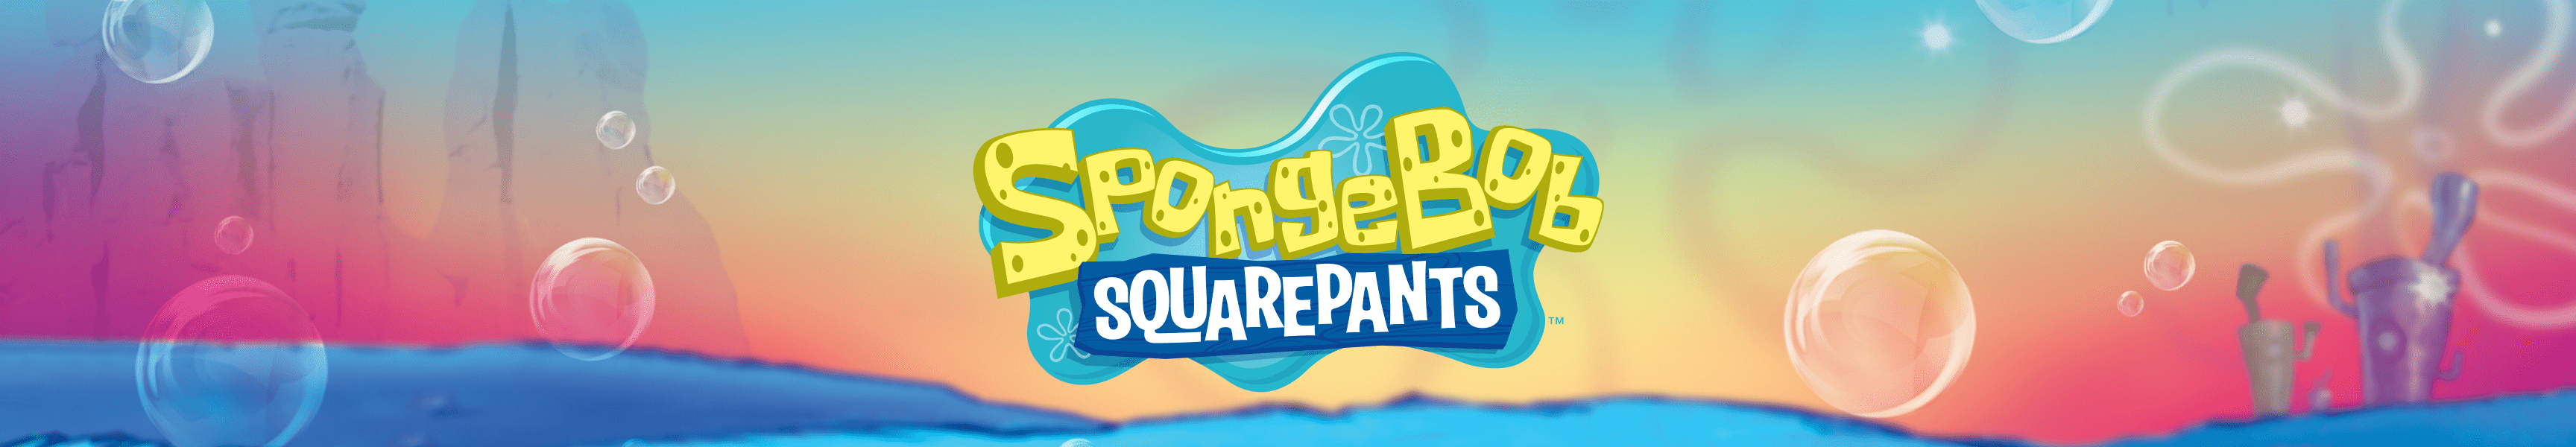 SpongeBob SquarePants Superfan